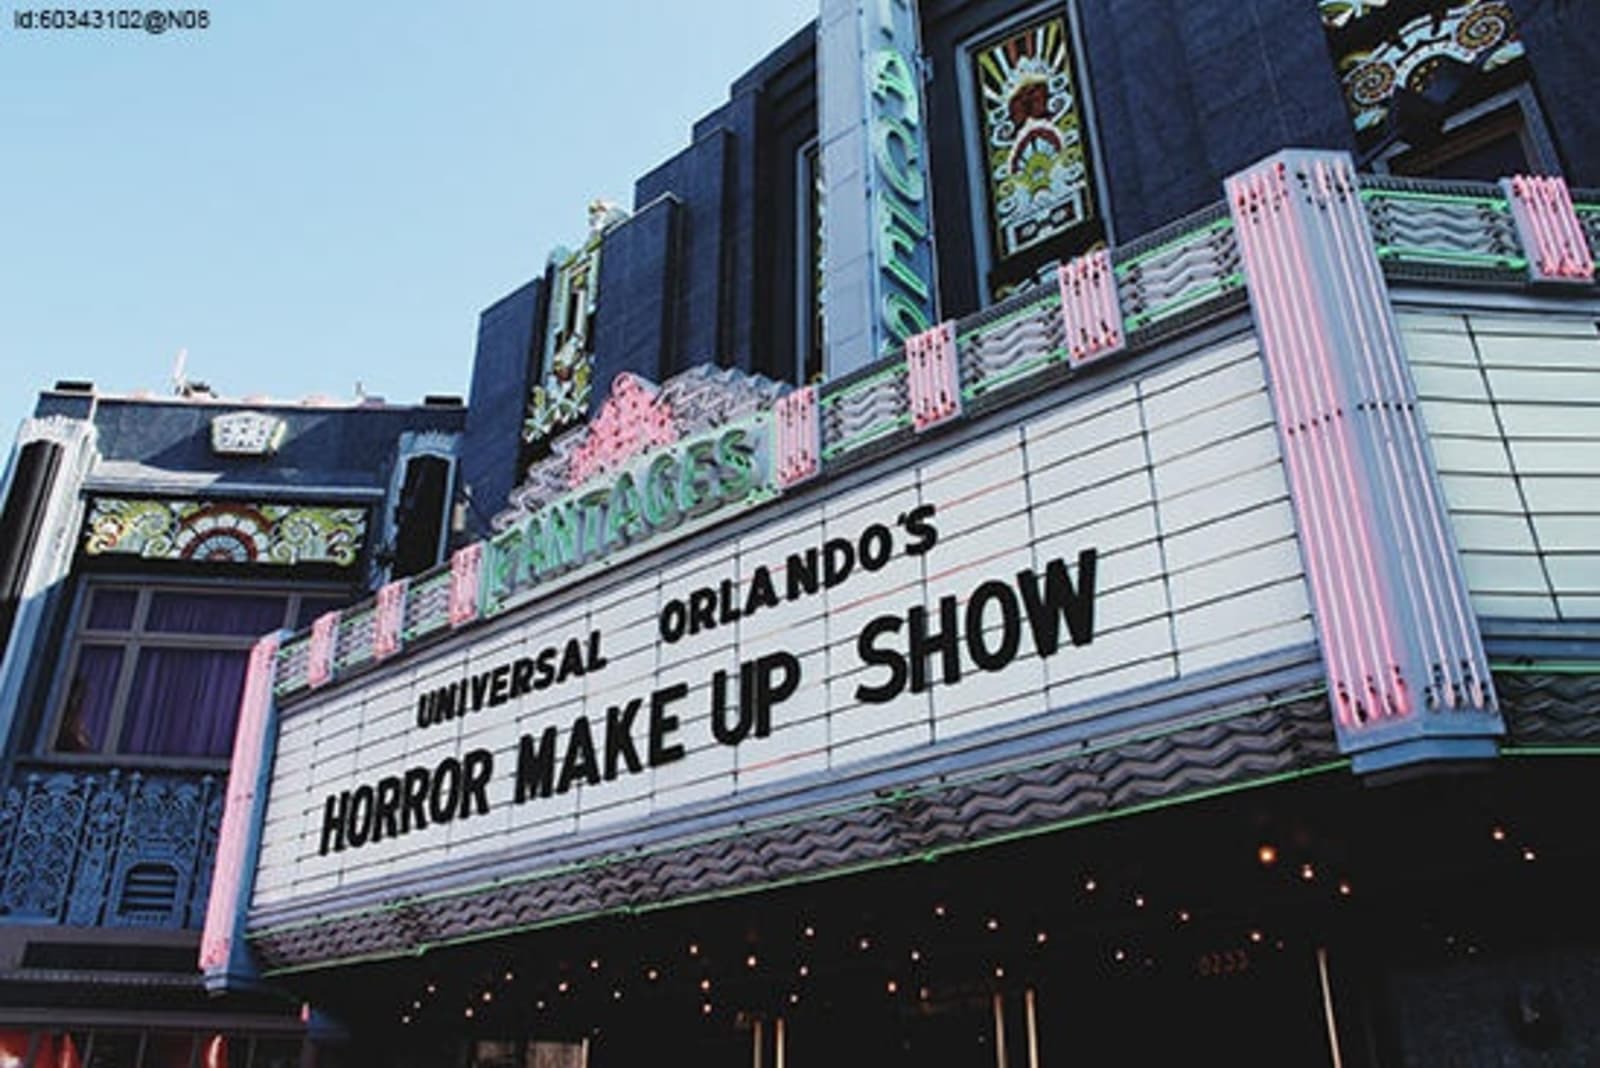 RS-Horror-make-up-show-Flickr.jpg